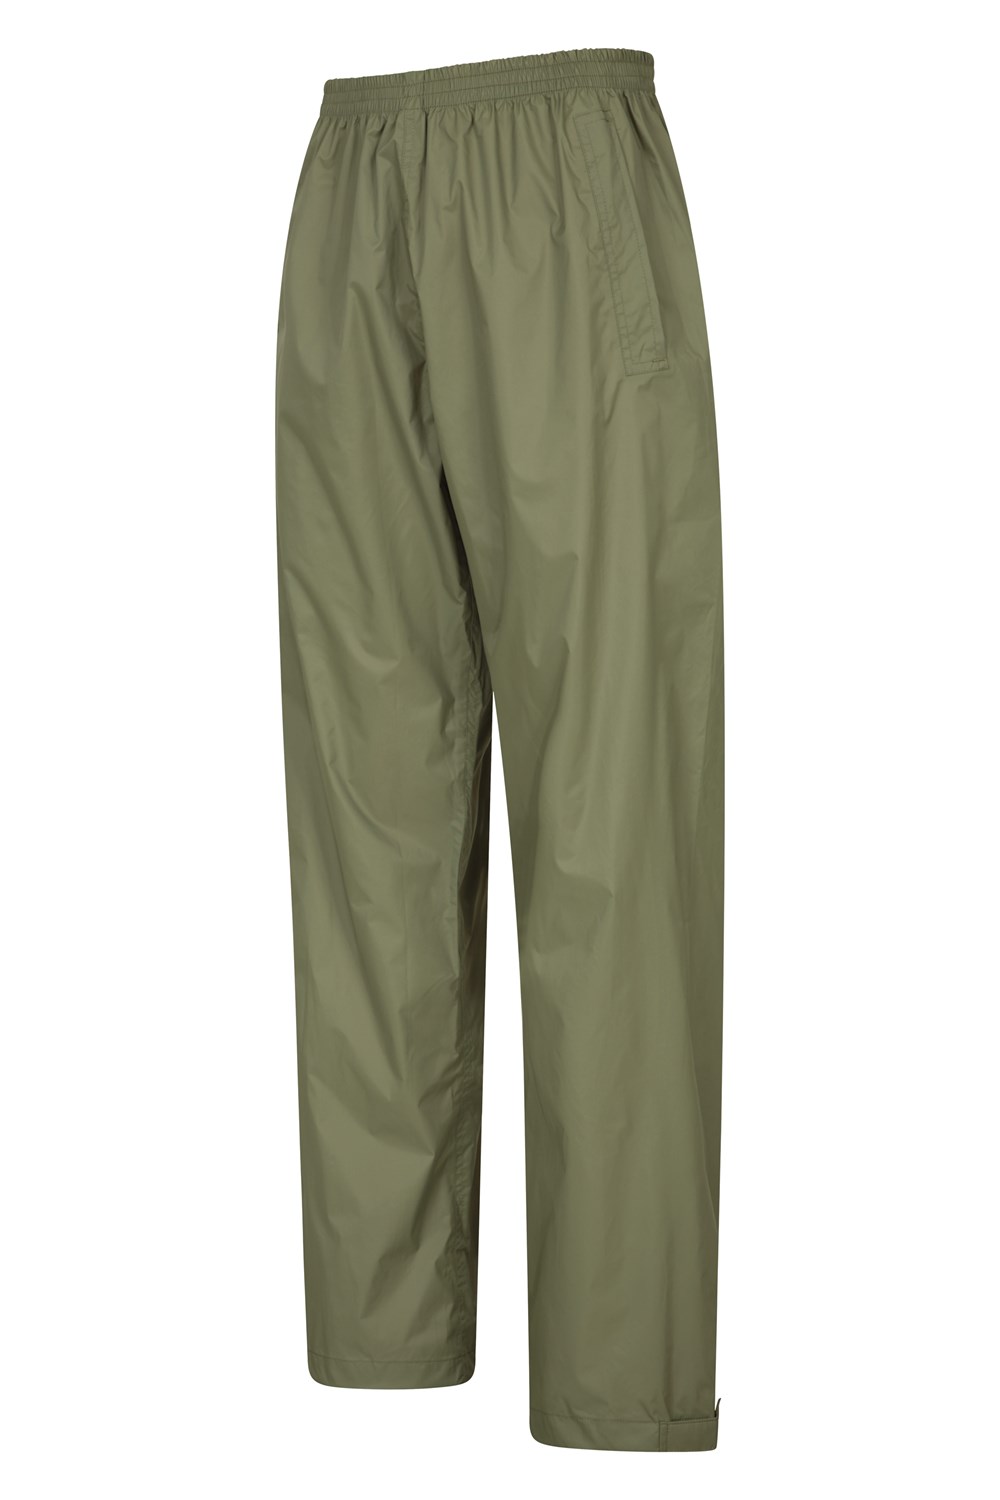 Mountain Warehouse Womens Waterproof Over Trousers Walking Rain Pants ...